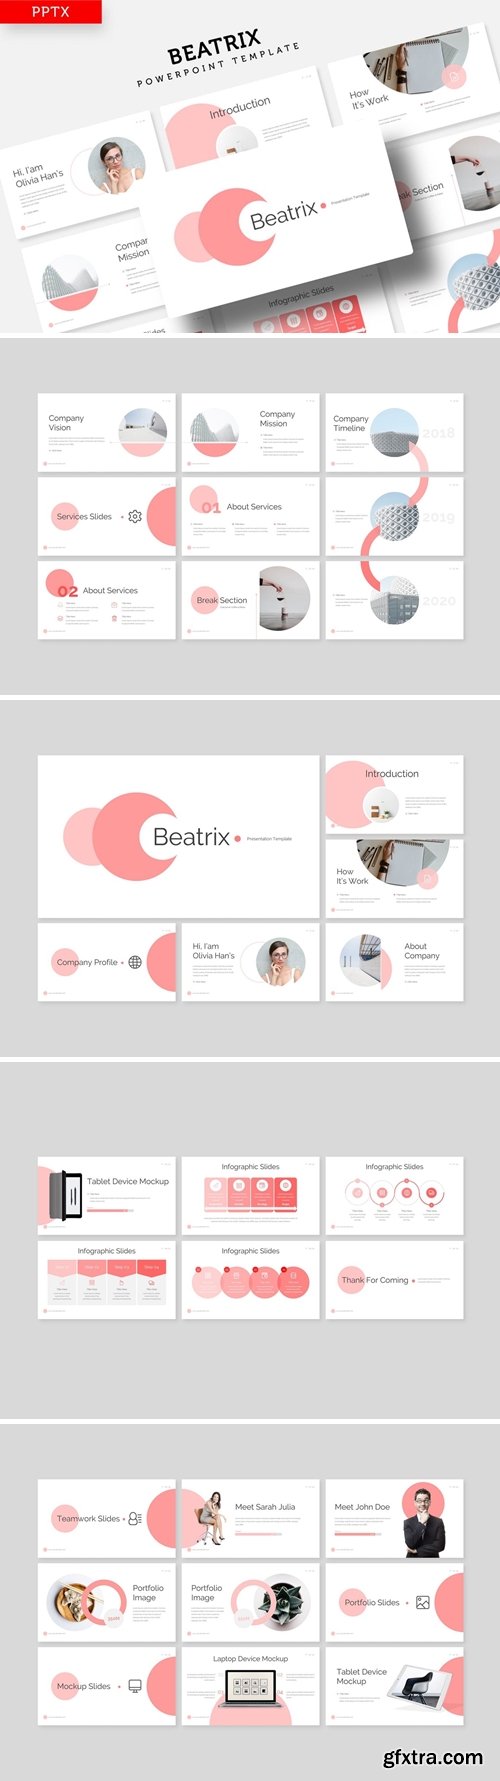 Beatrix Powerpoint, Keynote and Google Slides Templates